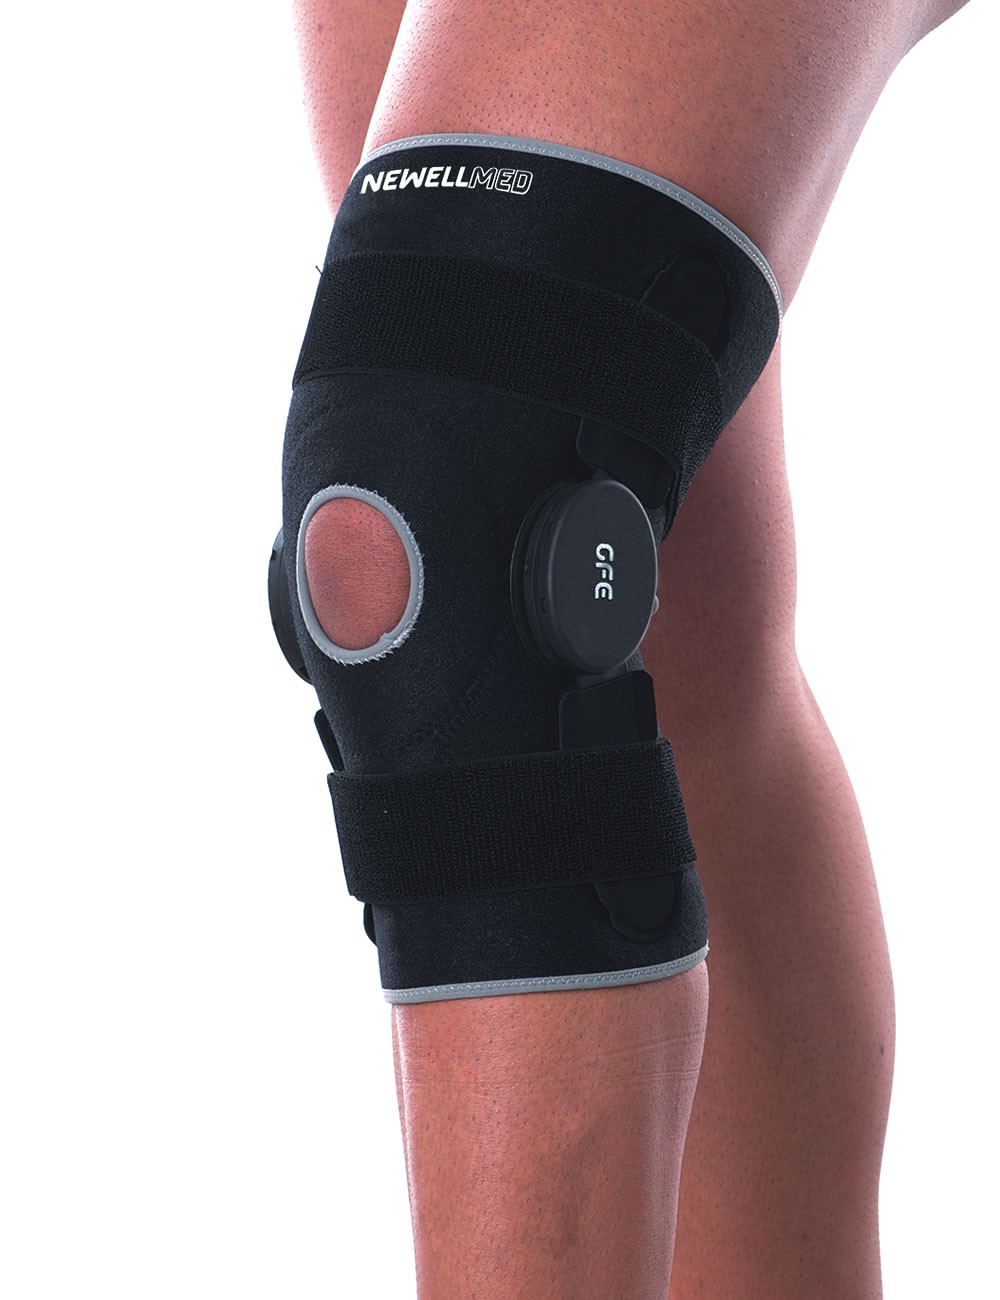 PK41 - Tubolar knee brace